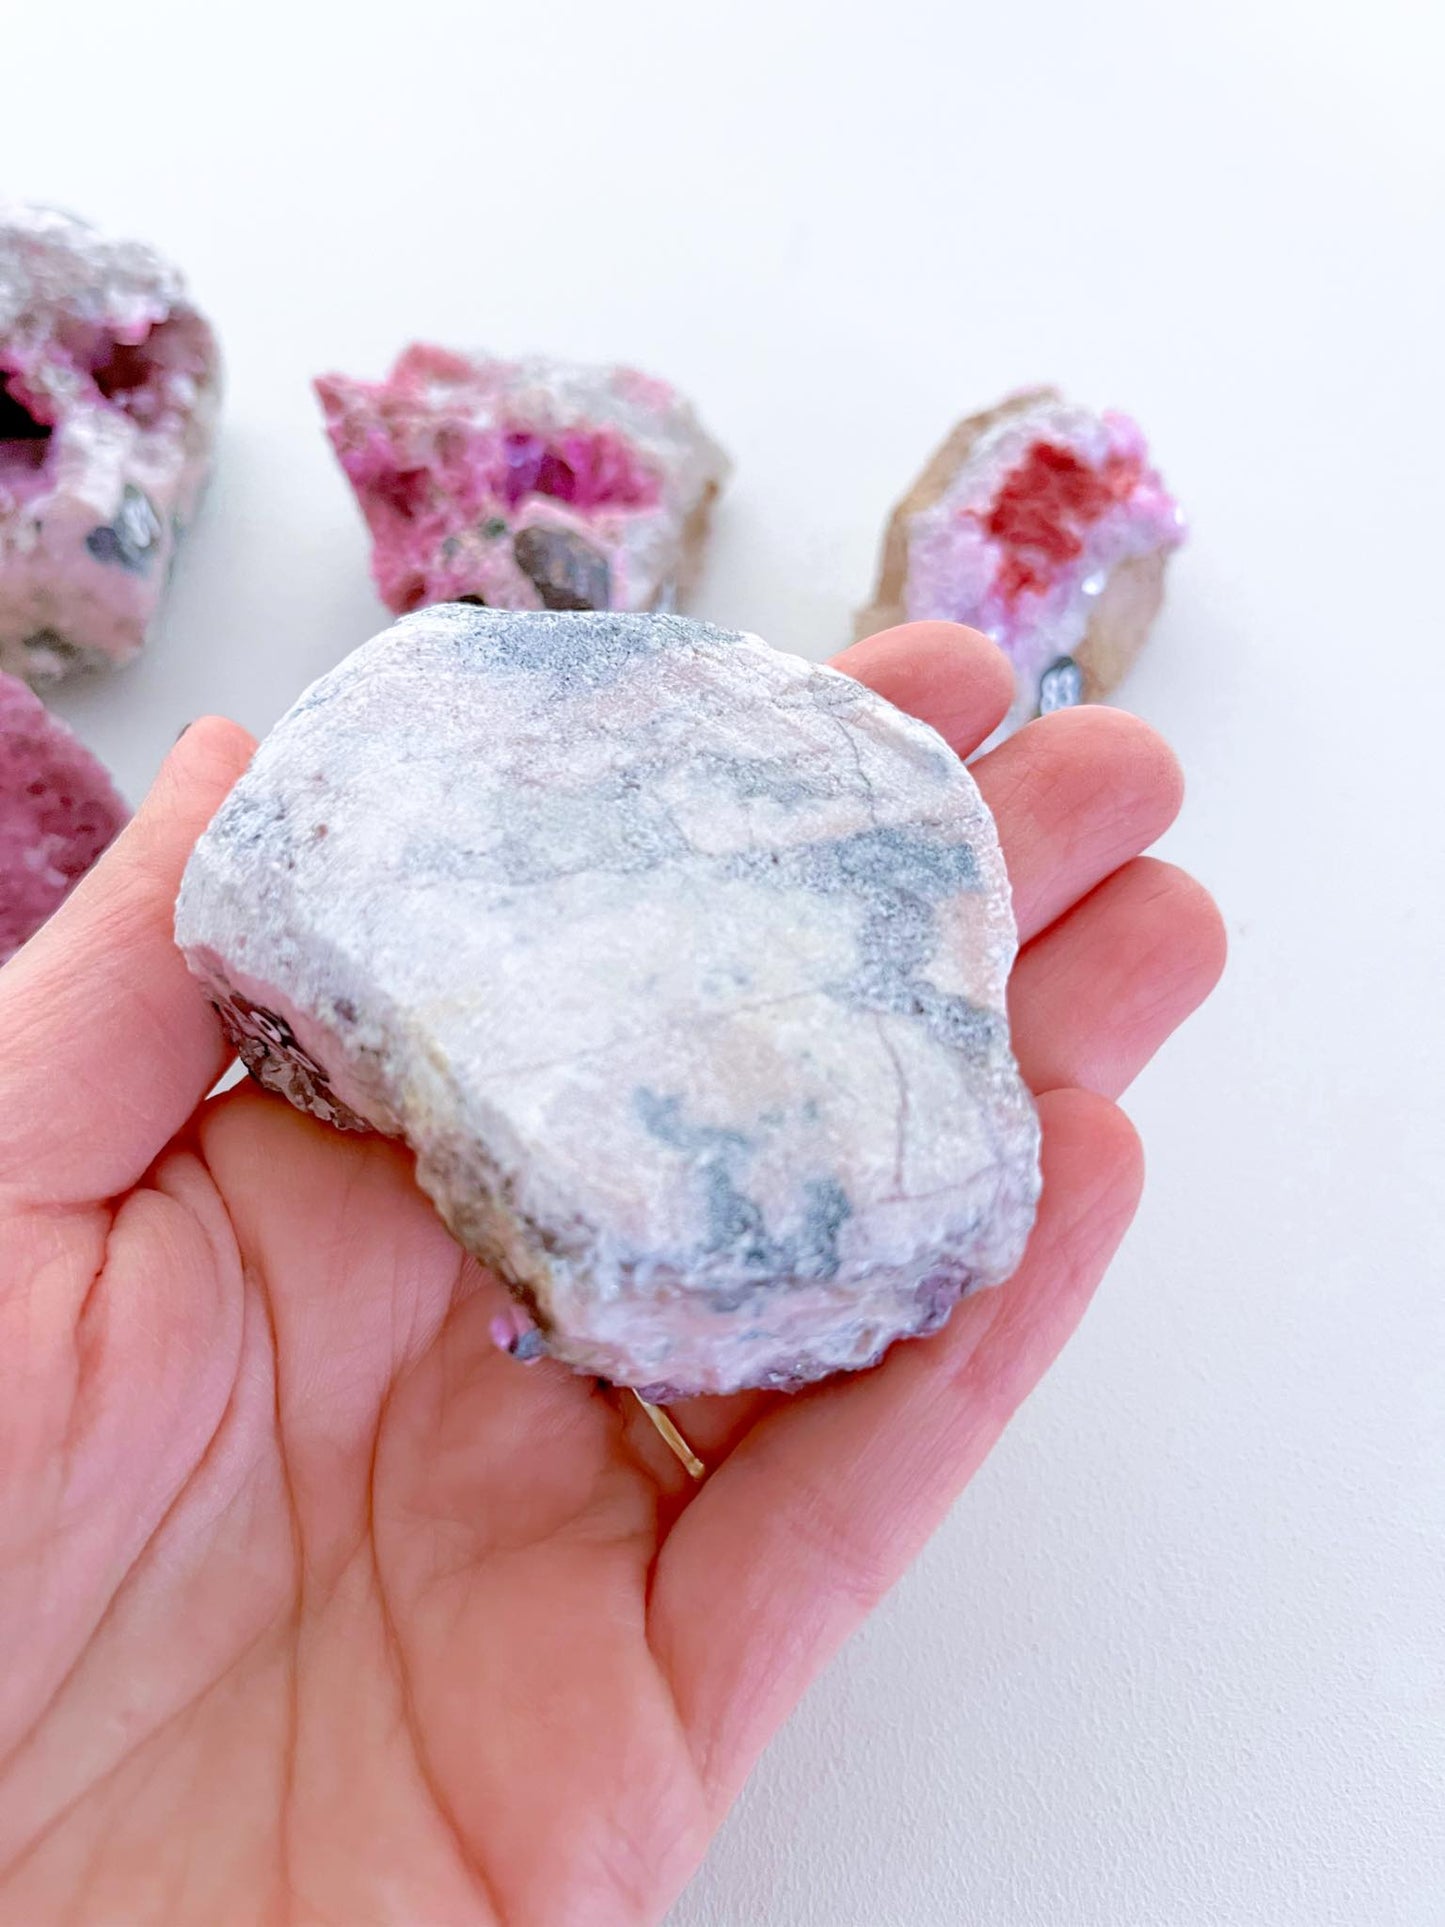 Hot and Jucy Pink Cobalto Calcite Specimen [86]- aus Marokko High Quality